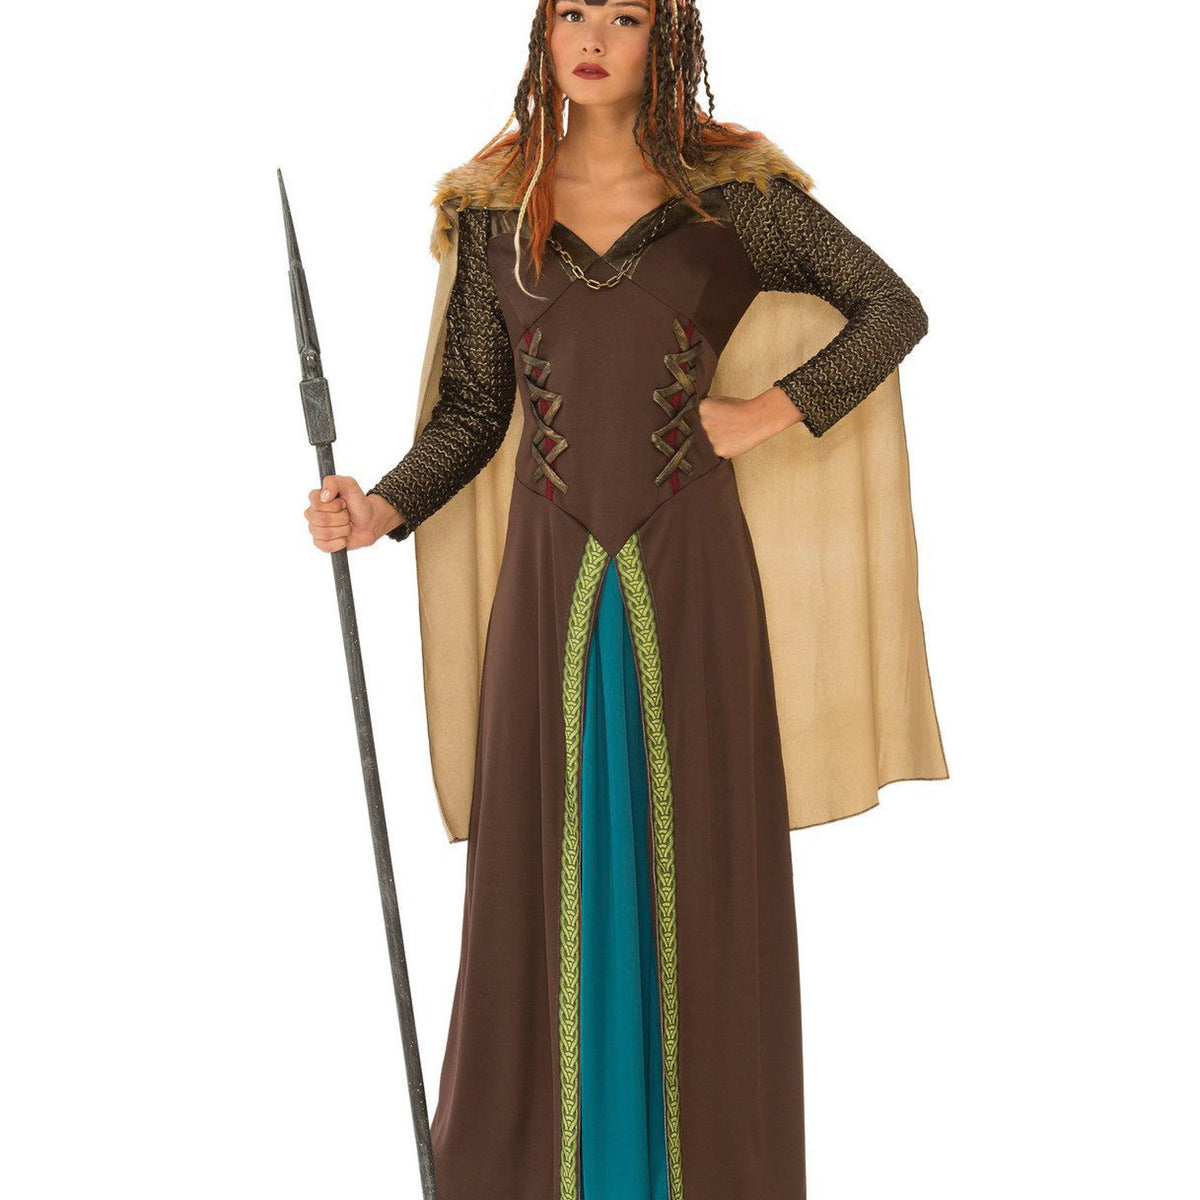 Celina 8 PC. Ladies Modern Day Viking Costume Set